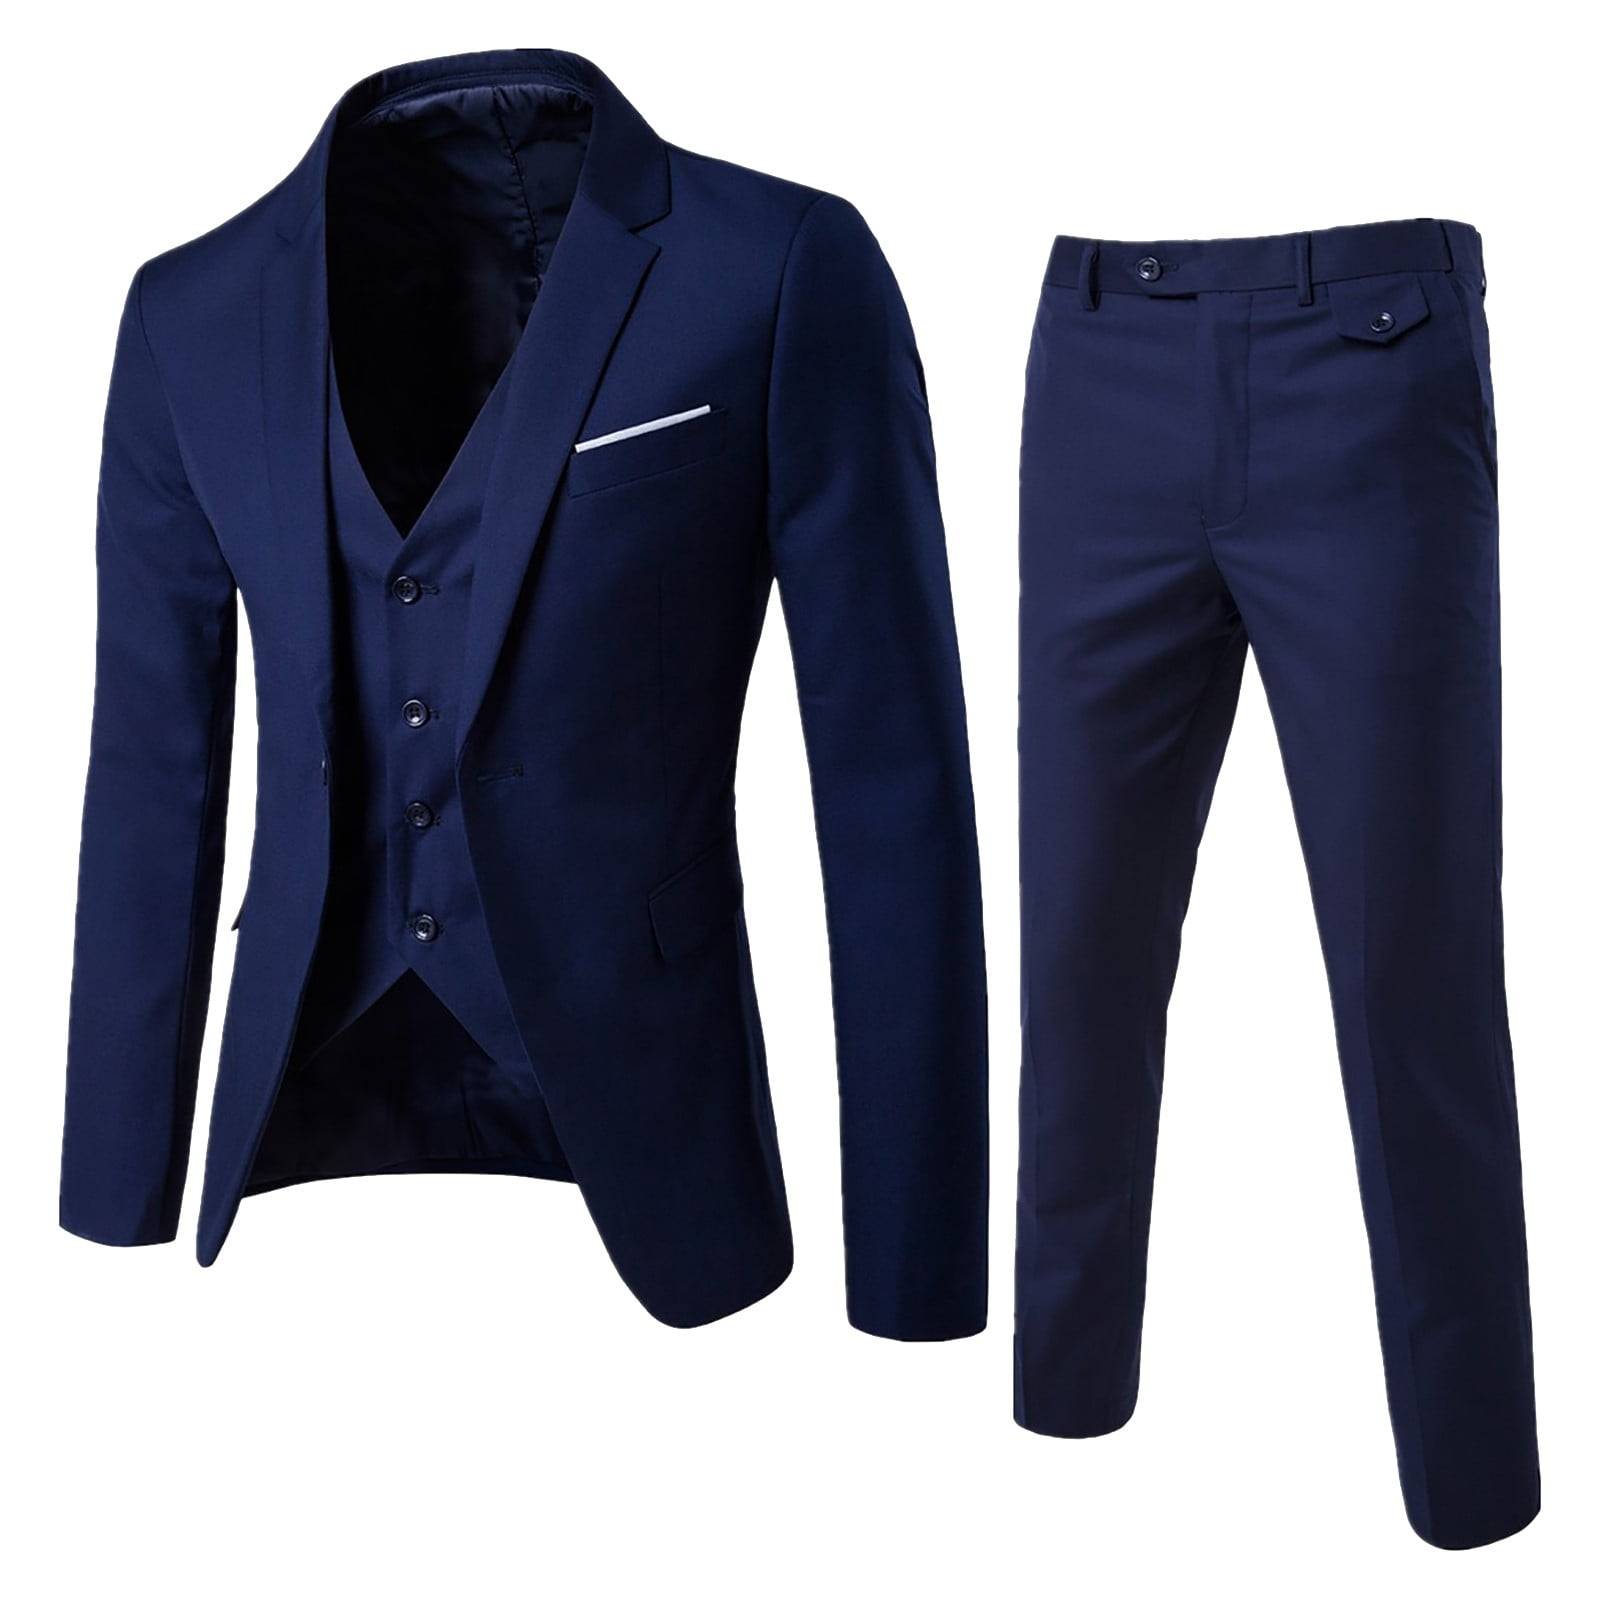 kpoplk Mens Blazers And Sport Coats, Jacket for Men's Business Suit Casual  Velveteen Blazer Shawl Lapel Single Non-Iron Suit Coat Tops(Navy,L) 